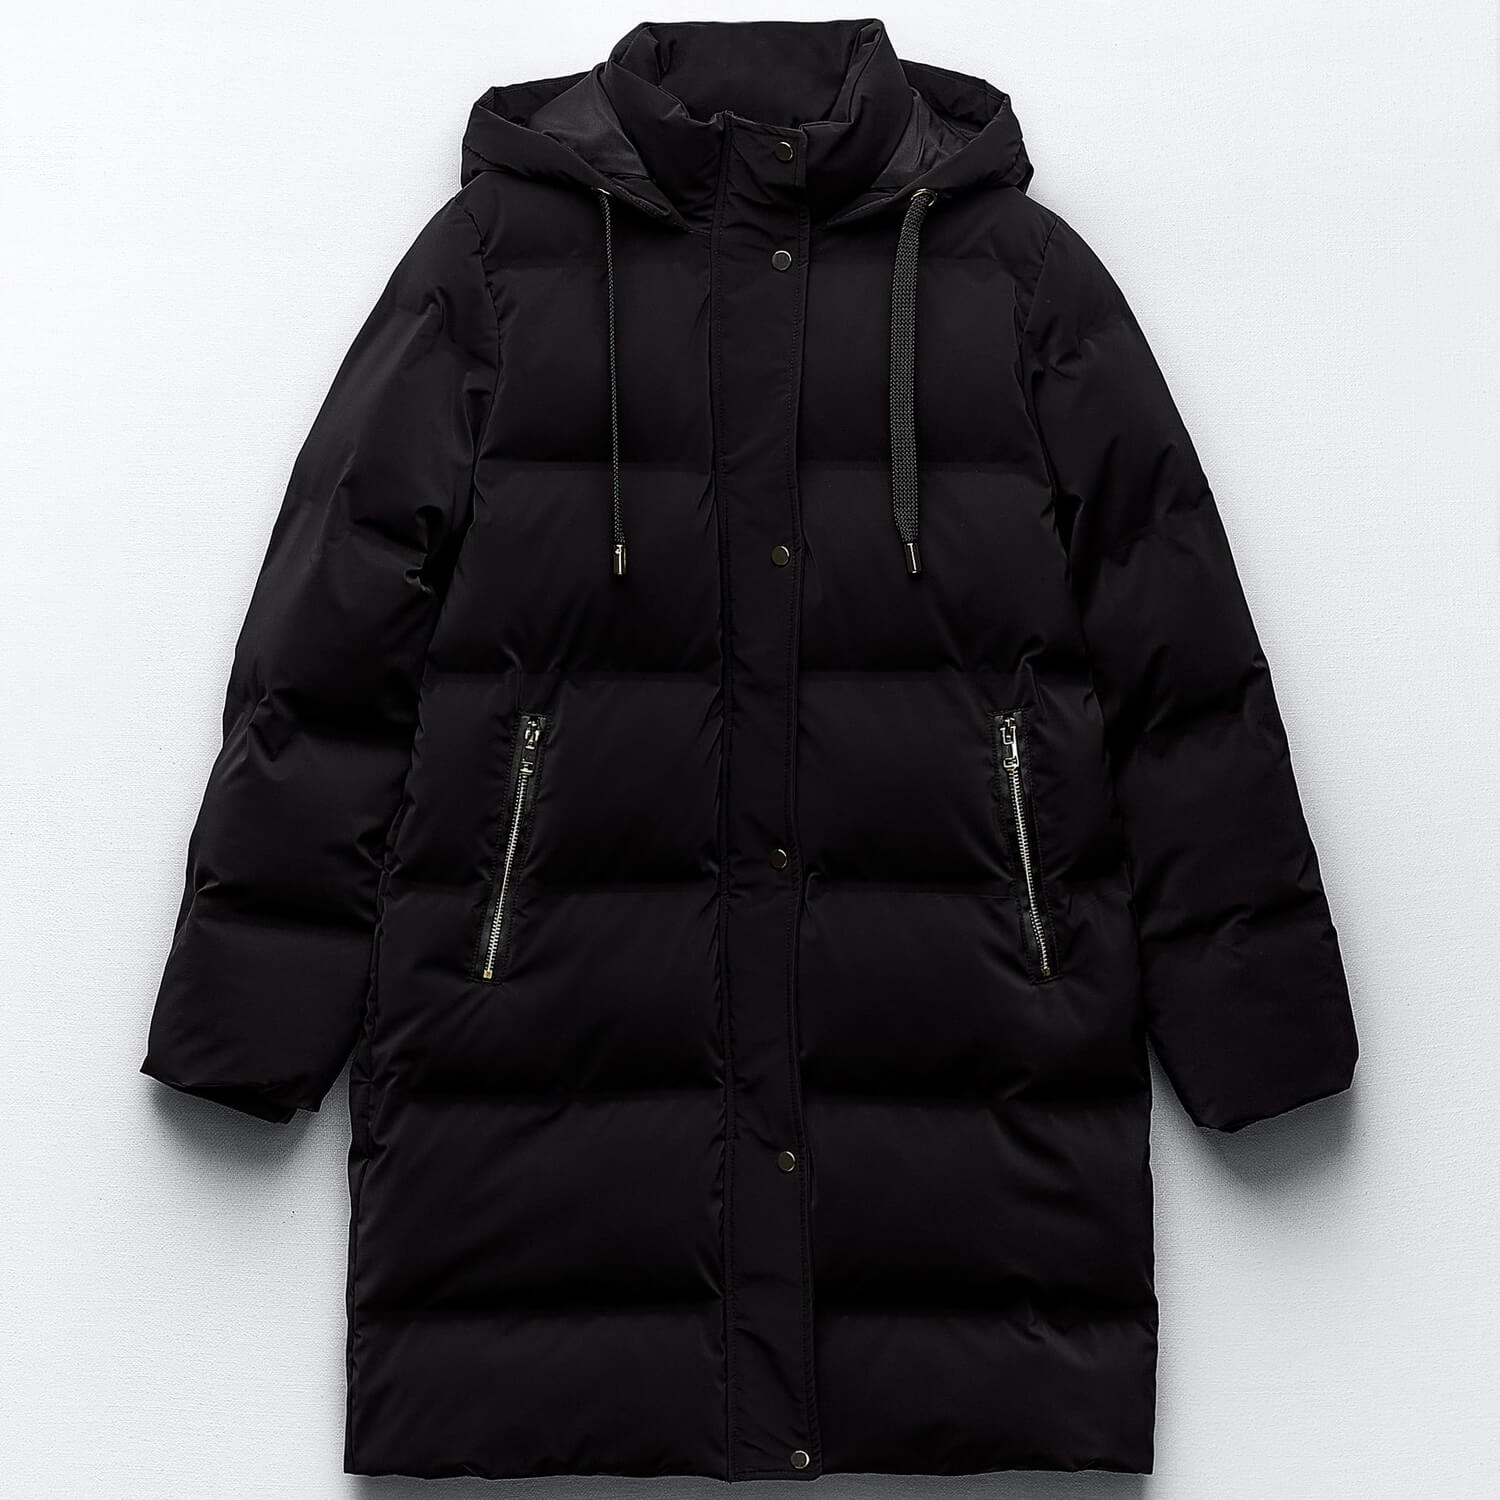 Куртка-анорак Zara Hooded With Wind Protection, черный толстовка jeep средней длины карманы капюшон карманы размер xs синий